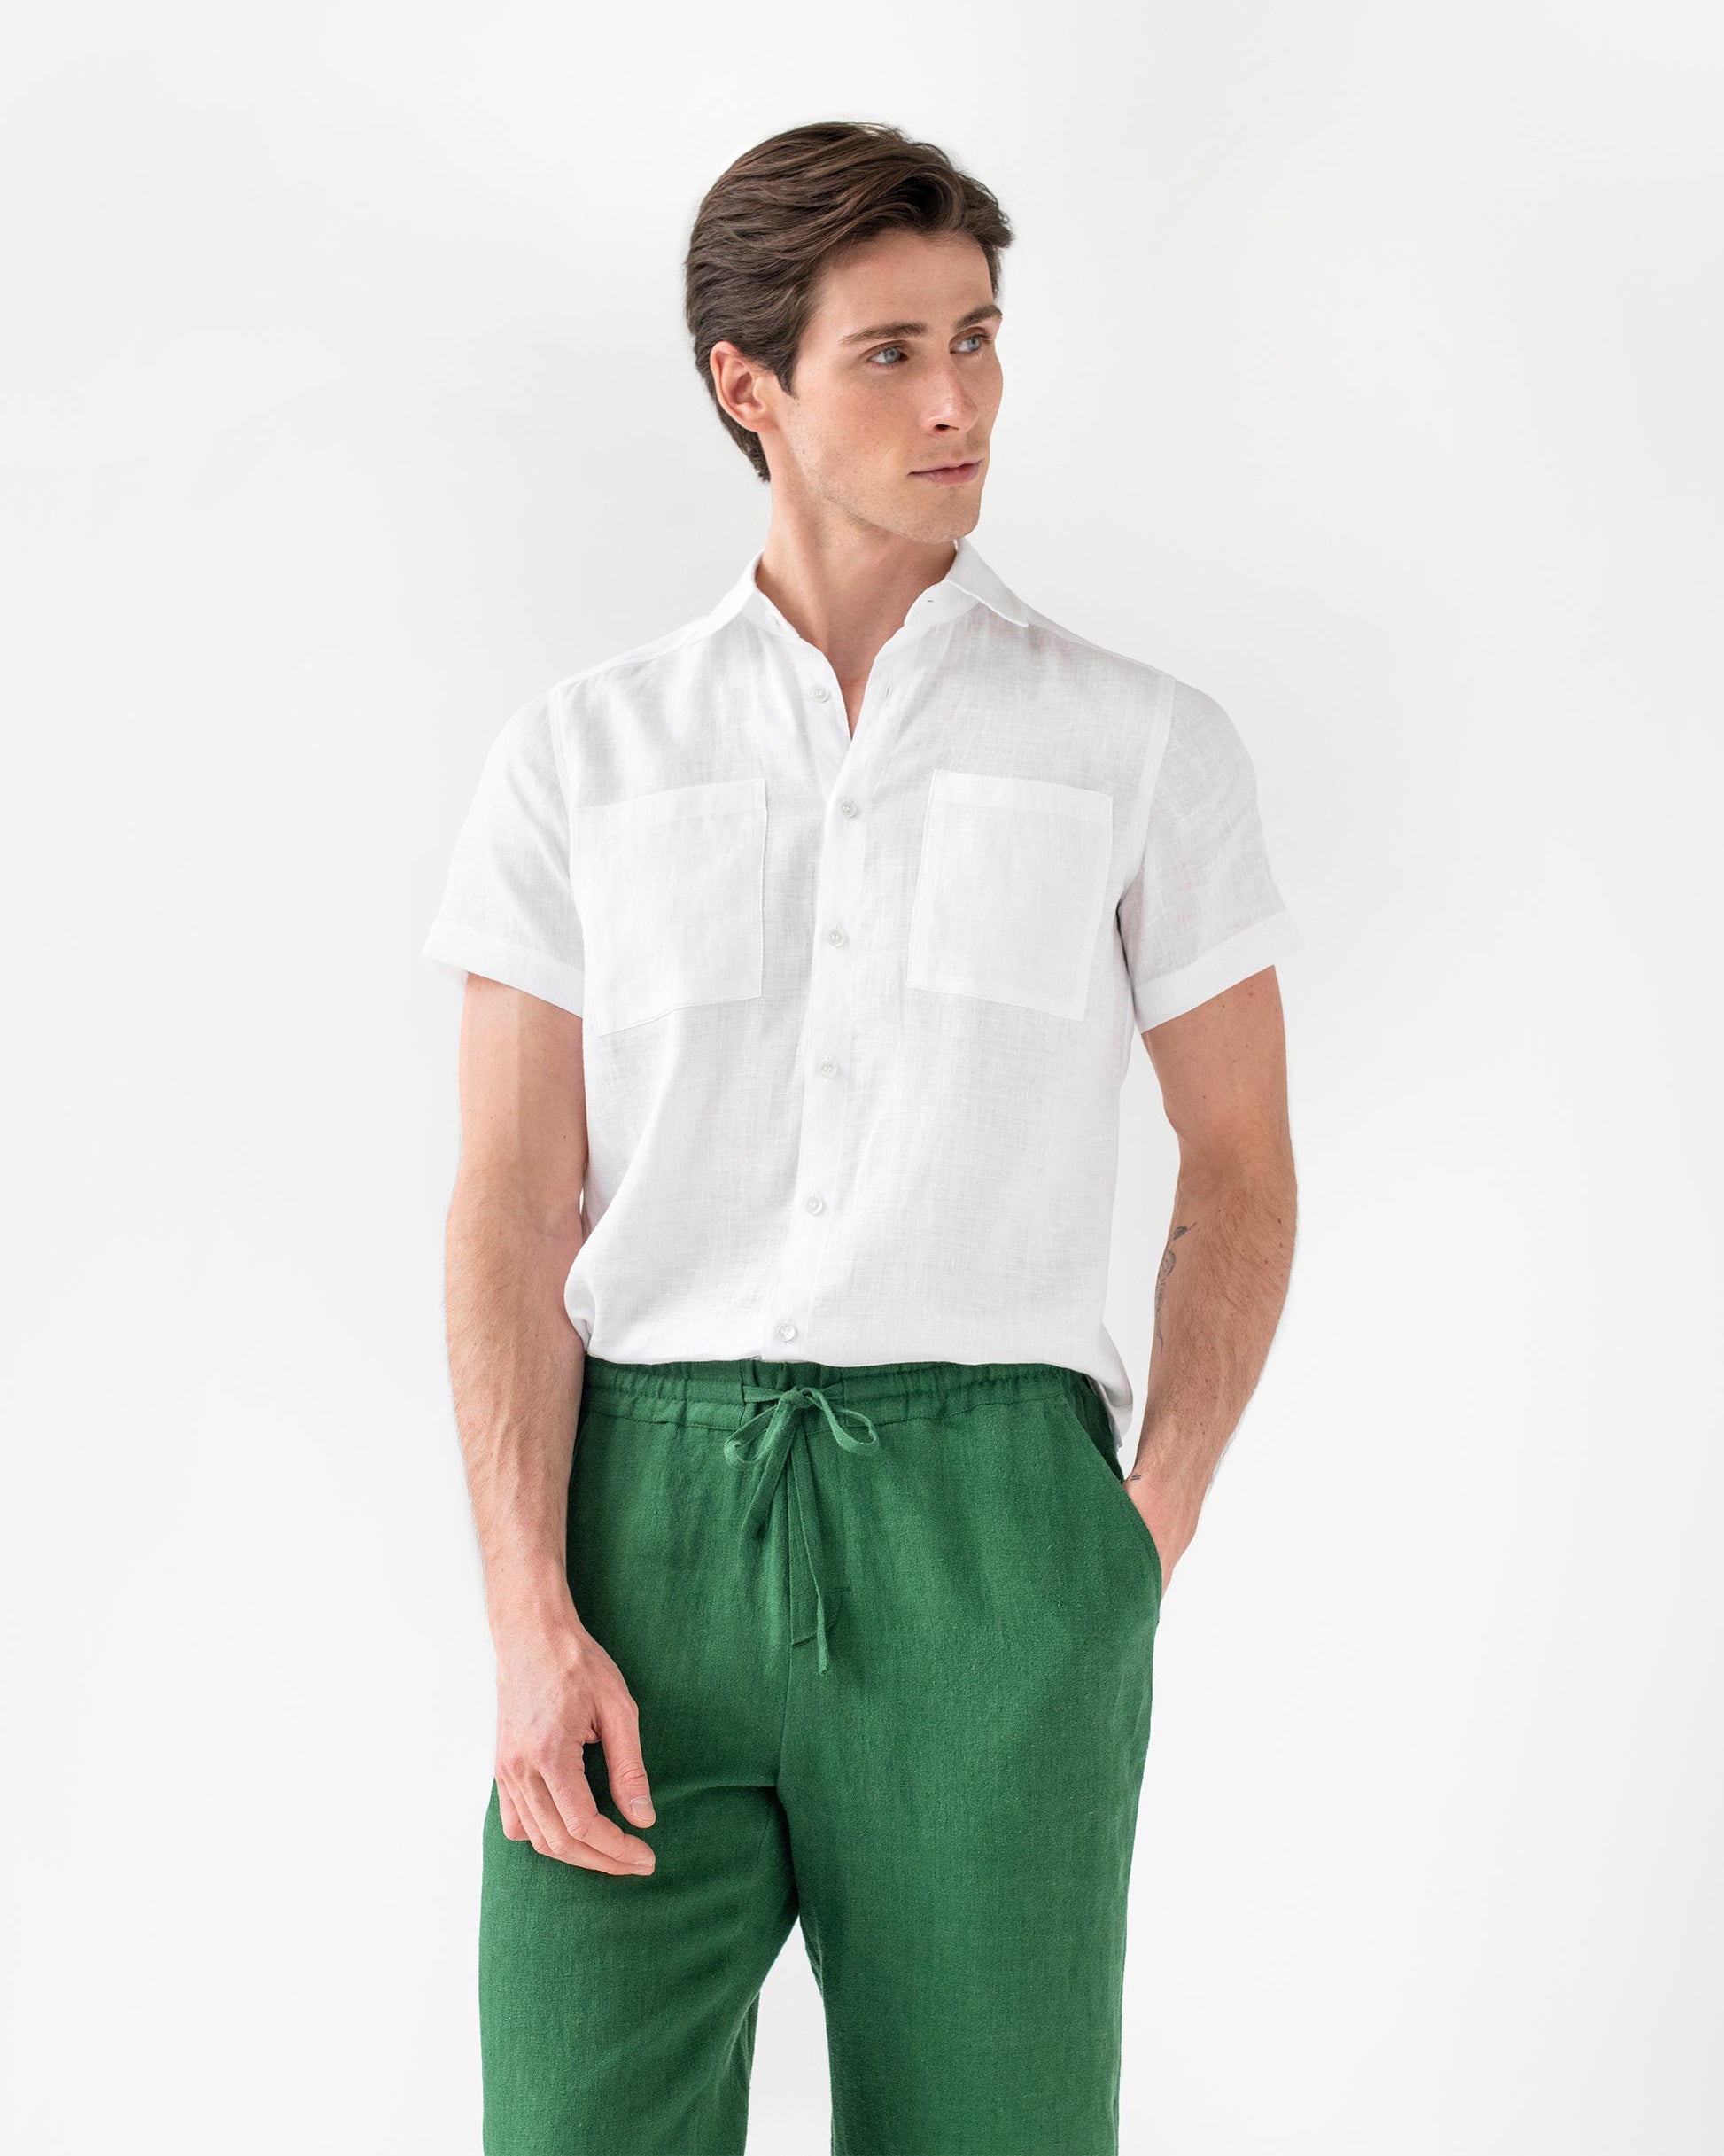 Men's linen pants PALERMO in green - MagicLinen